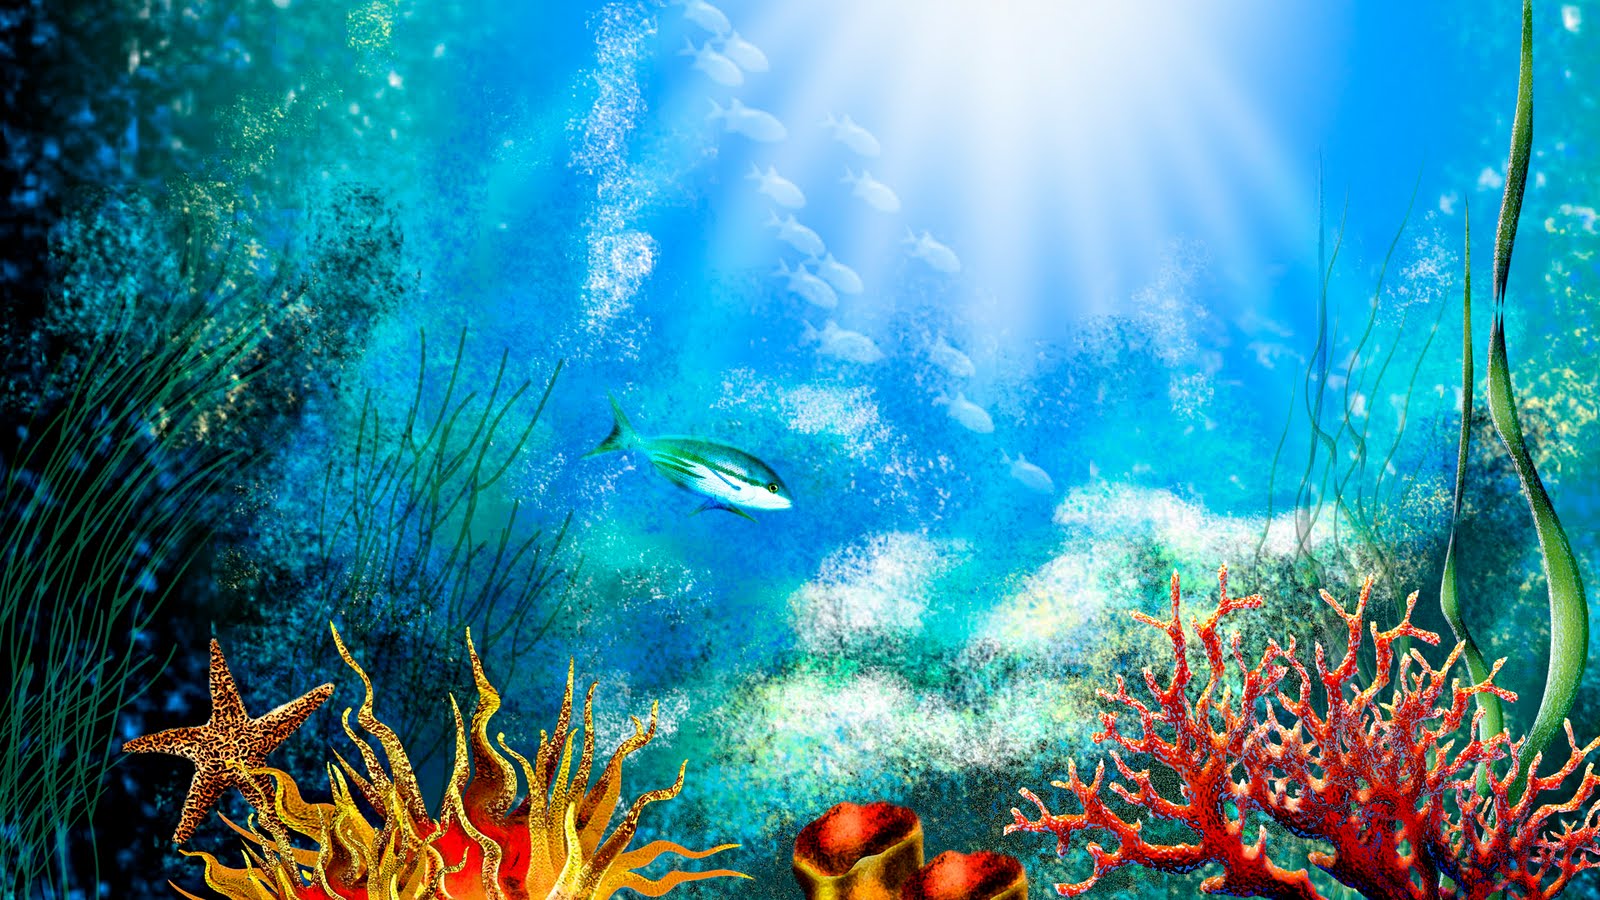 aquarium wallpaper hd,underwater,marine biology,coral reef,coral reef fish,natural environment